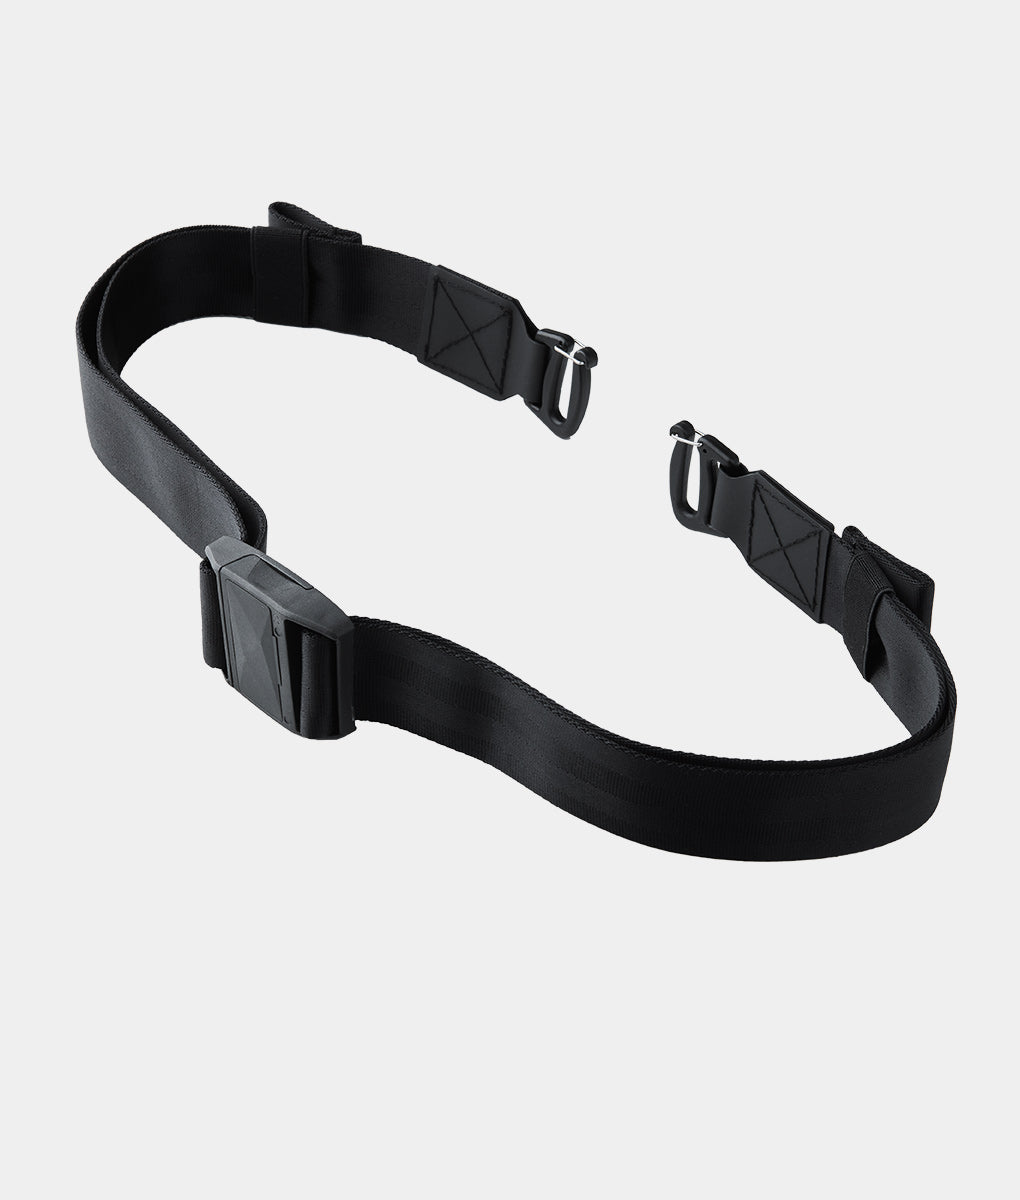 Secure Great Savings On Wholesale adjustable strap buckle